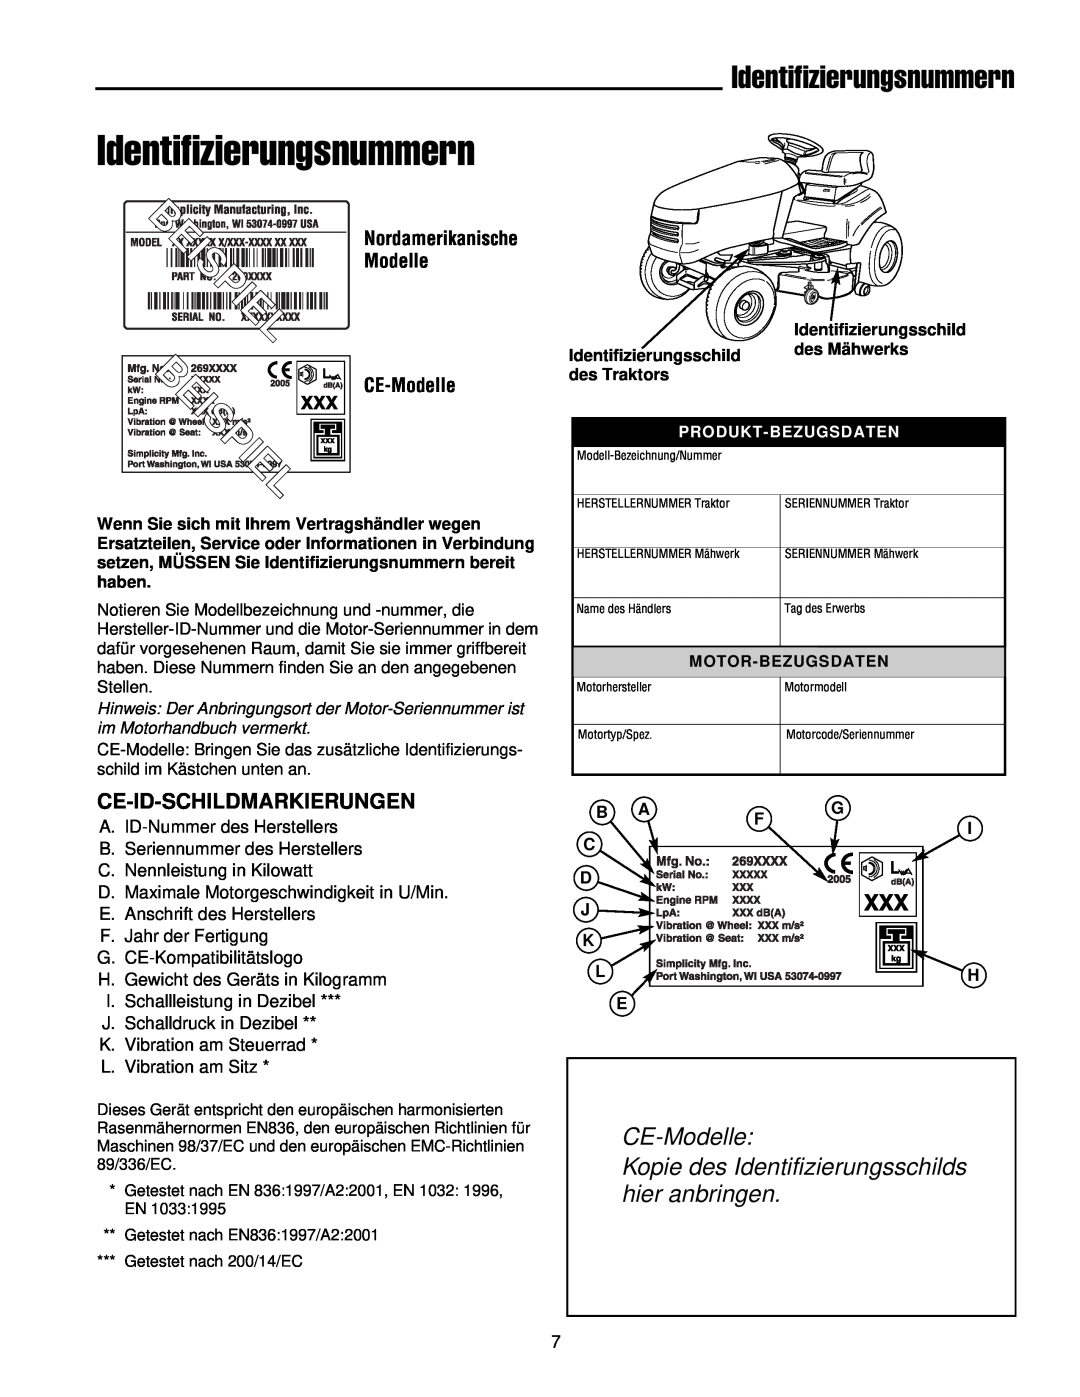 Simplicity 300 manual Identifizierungsnummern, Ce-Id-Schildmarkierungen, Beispi El, CE-Modelle, B Af G C D J K, L H E 